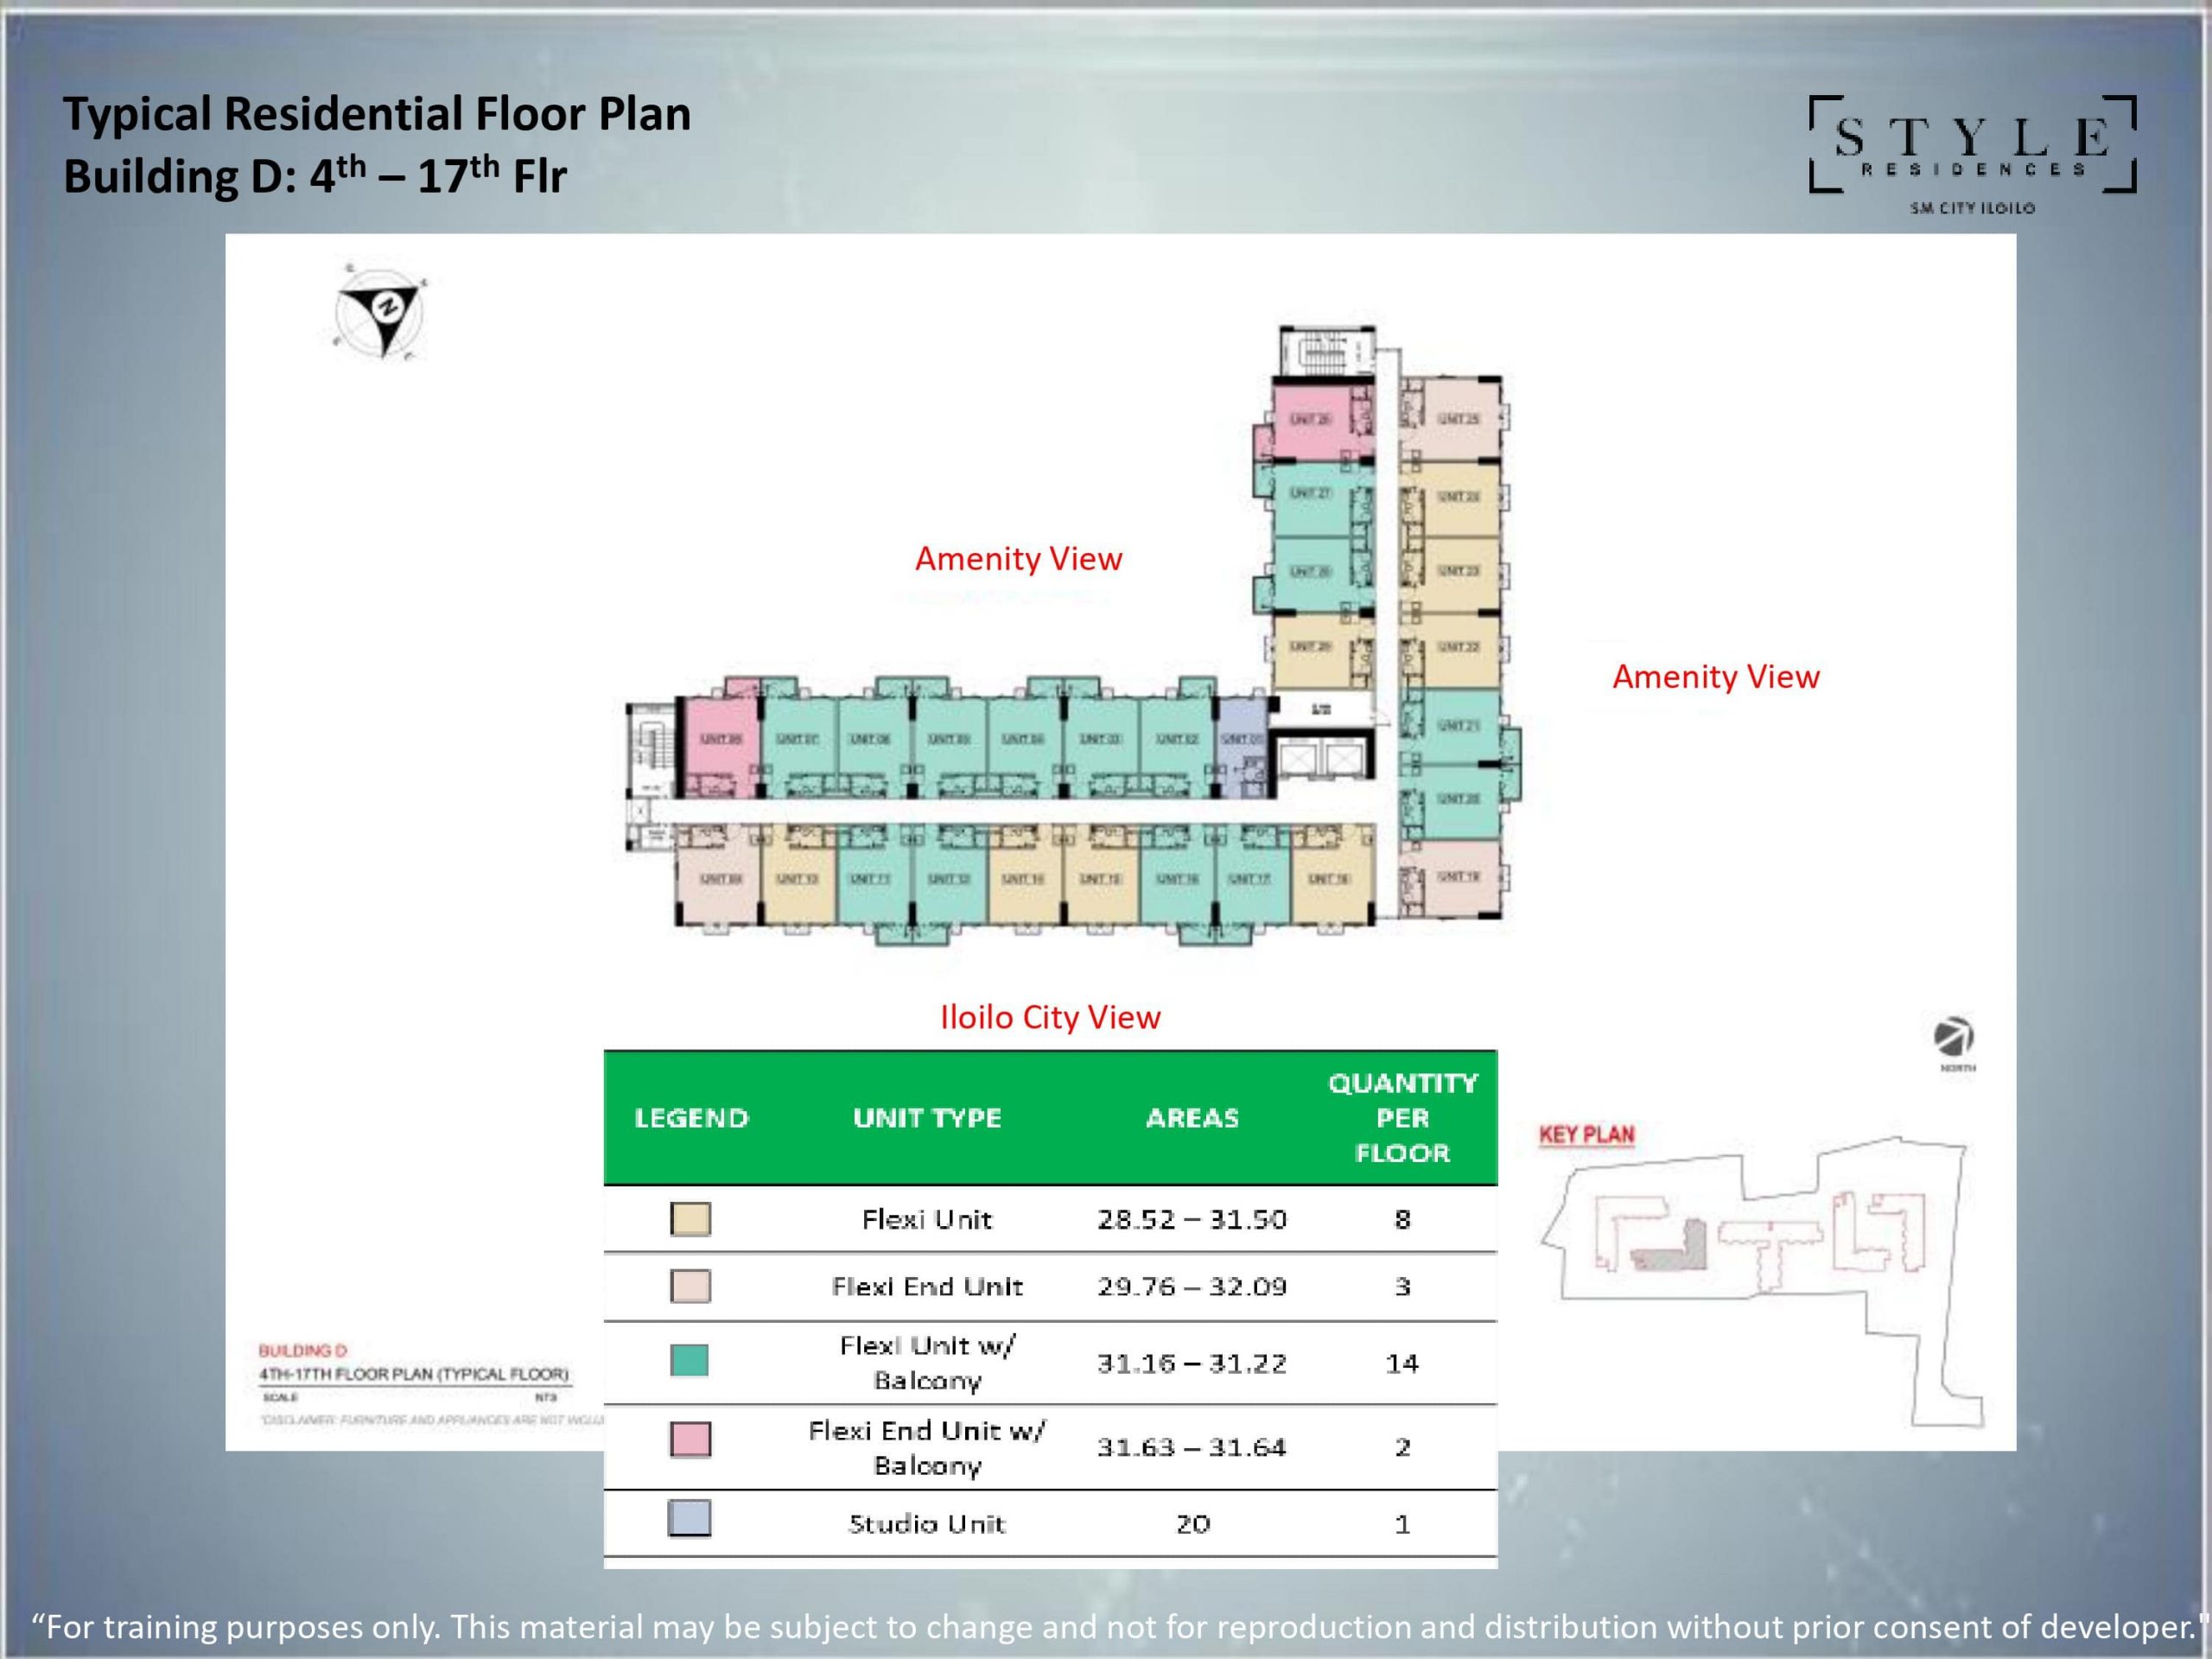 Building D 4th - 17th Floor Plan (Typical Floor)